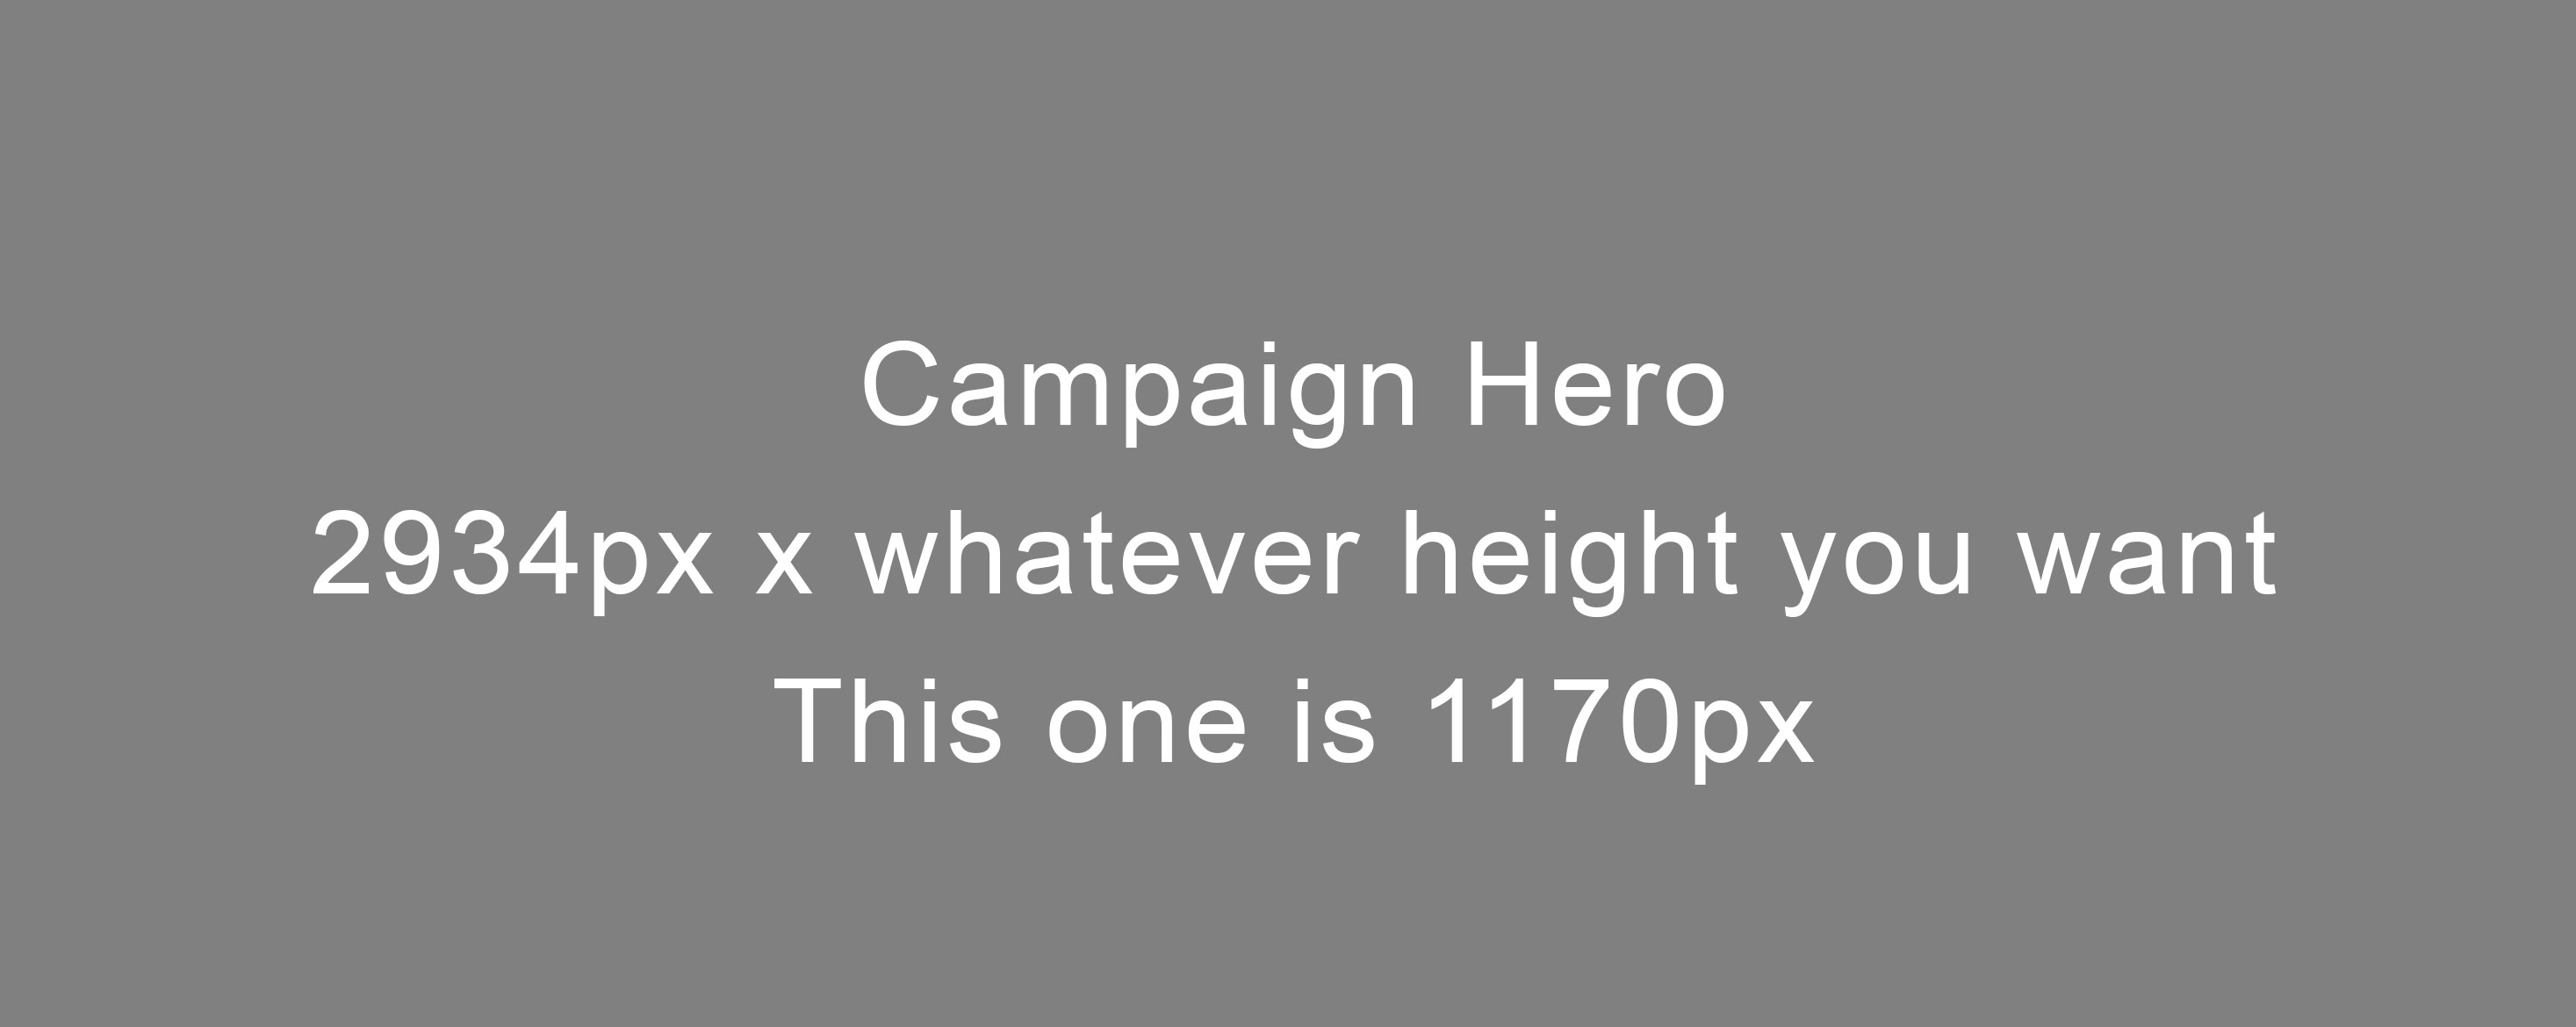 Campaign Hero Image